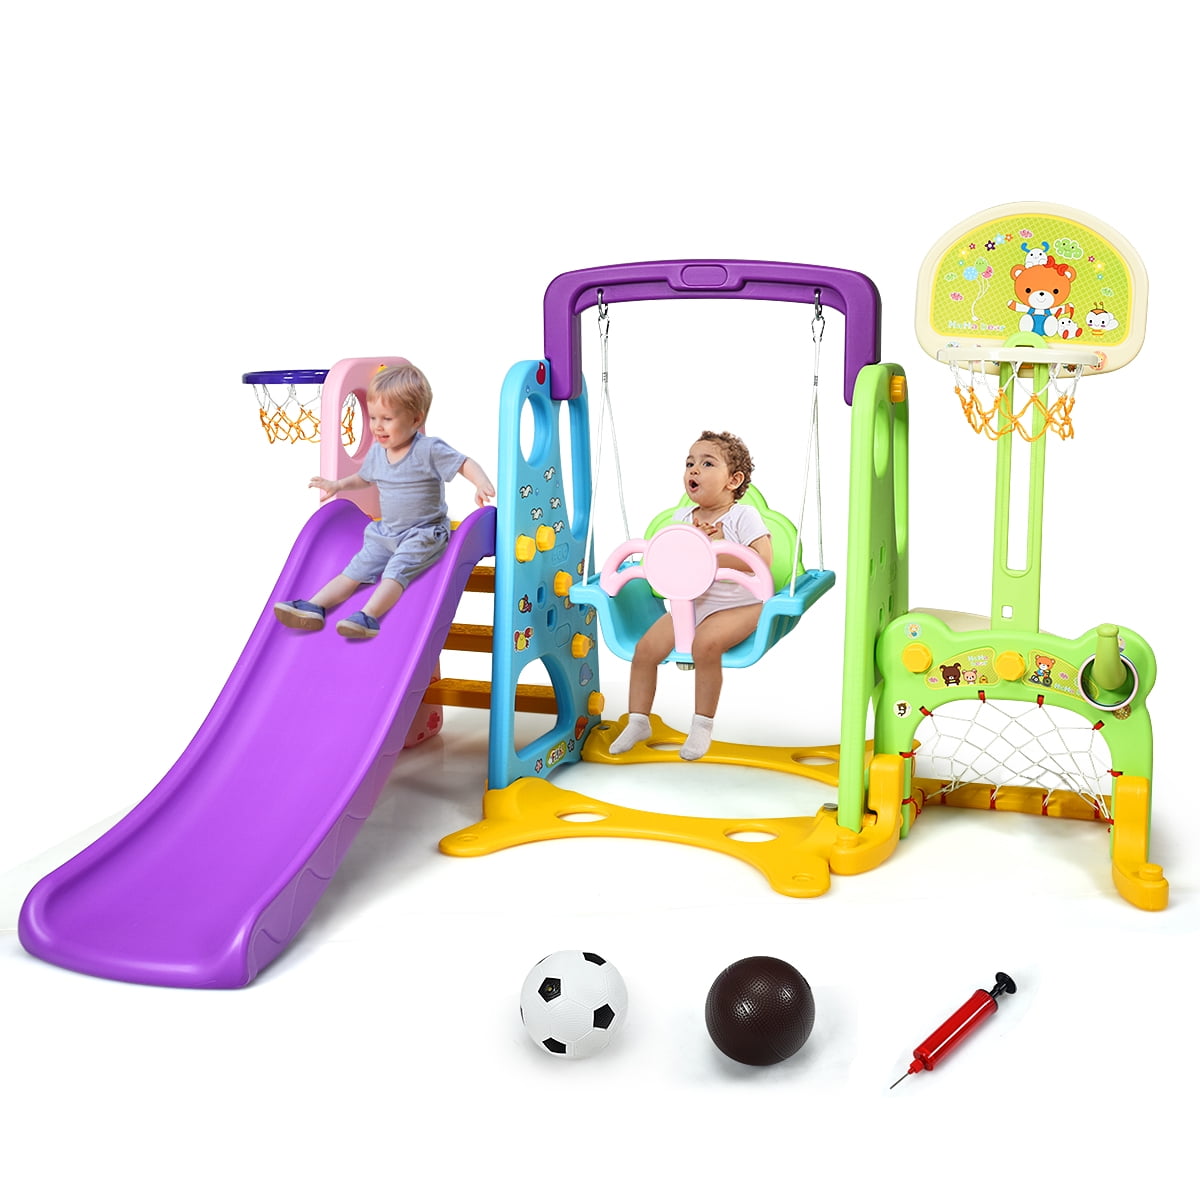 Toddler Swing Set Indoor Outdoor Backyard Foldable Kids Baby Swingset Playset 